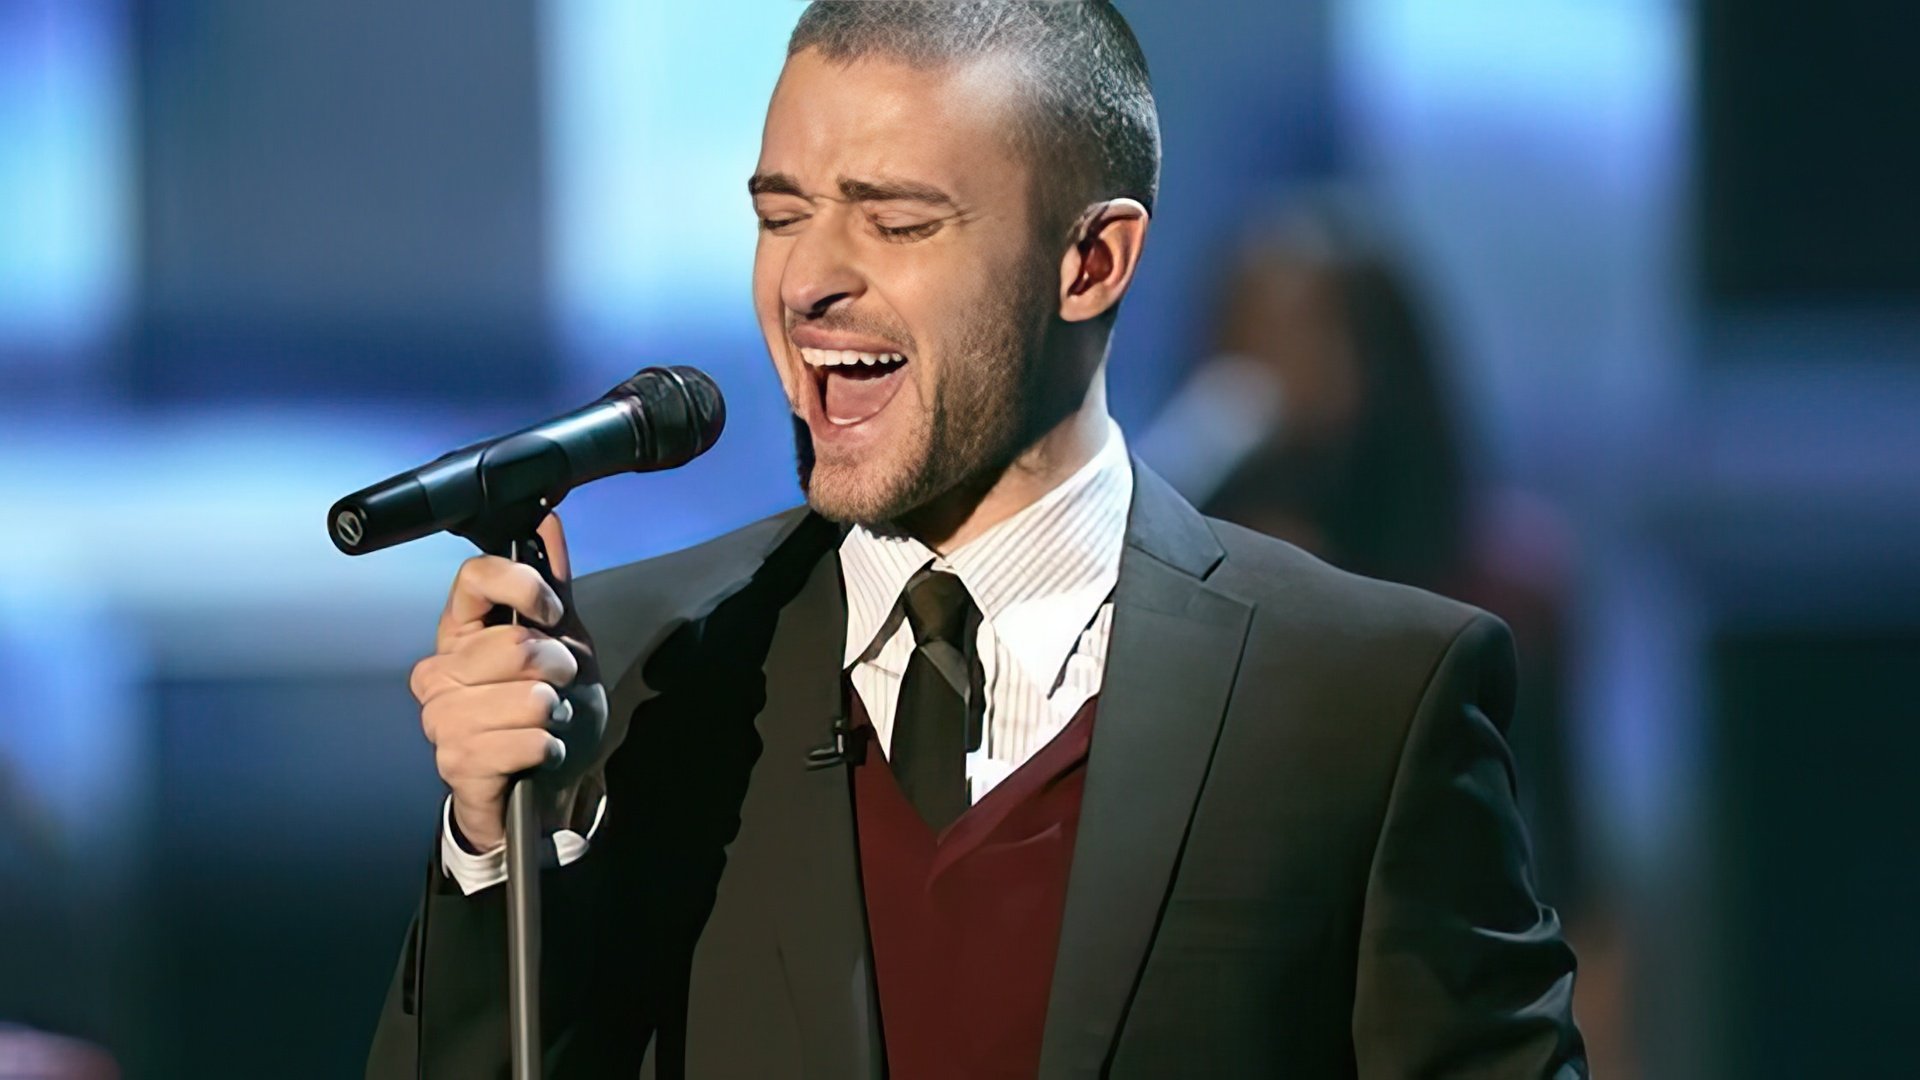 Justin Timberlake's popularity was gaining incredible momentum every year